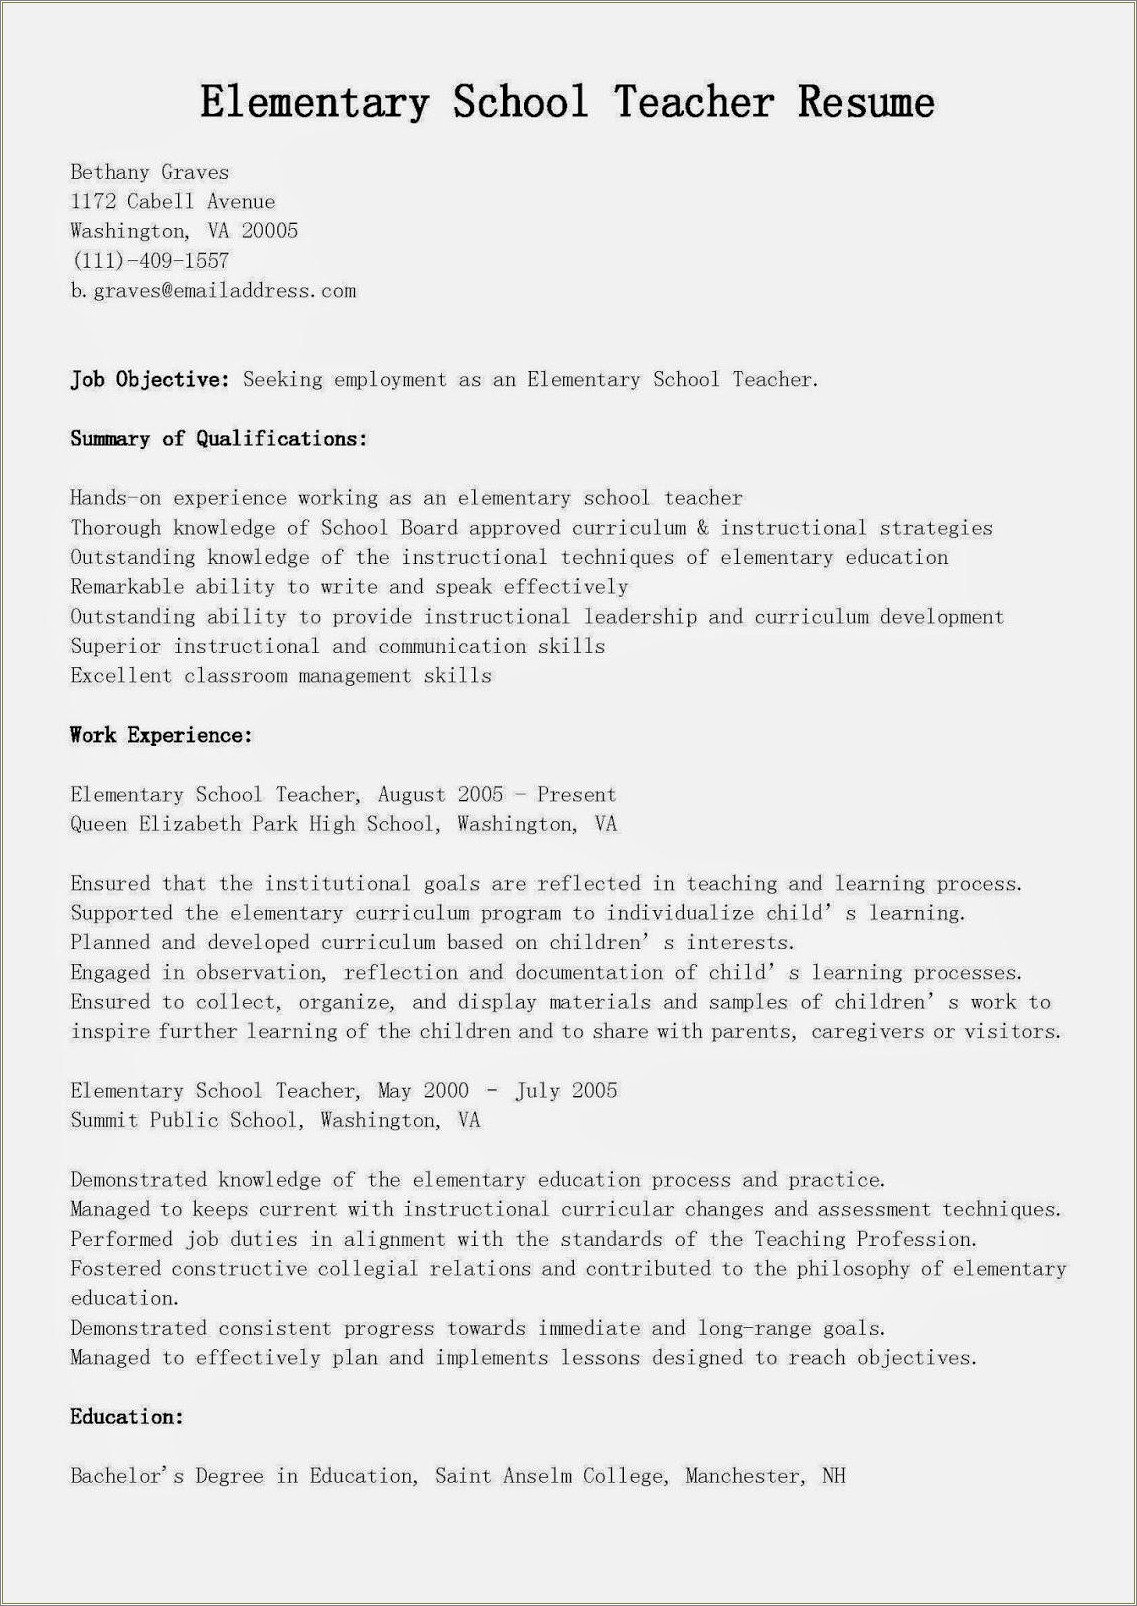 Elementary Principal Job Description For Resume